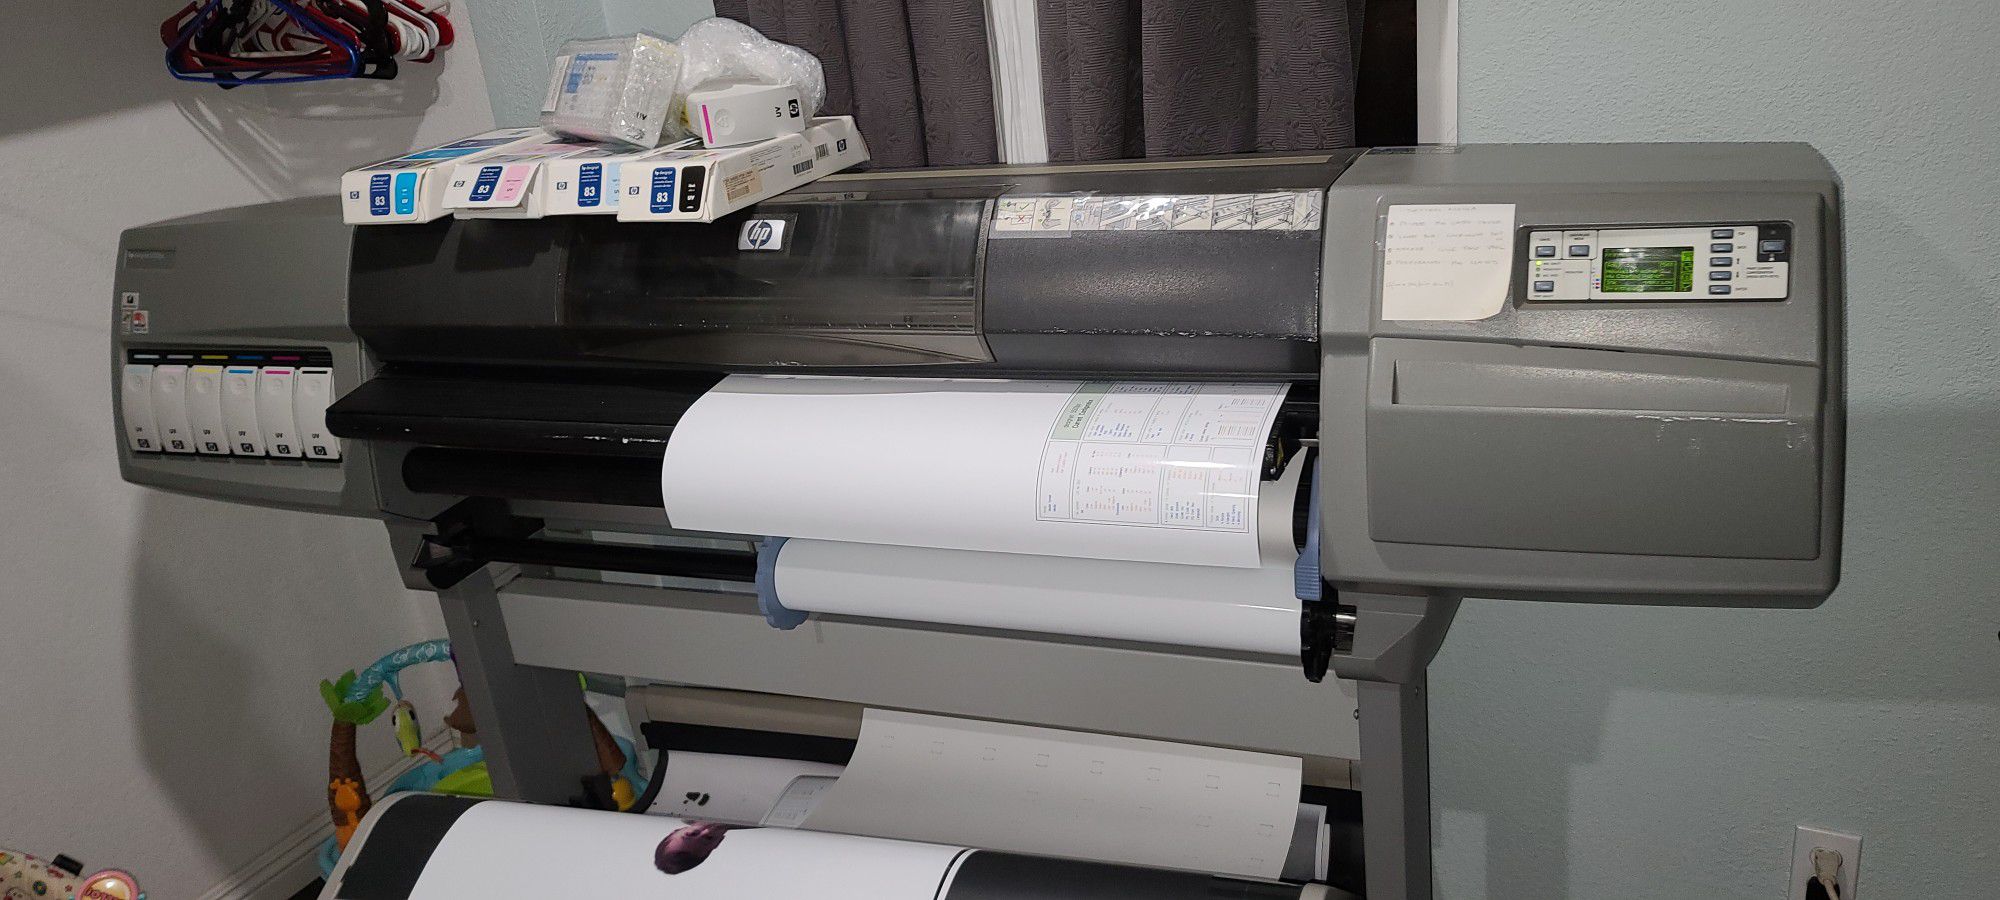 HP Designjet 5500ps Large Format Printer